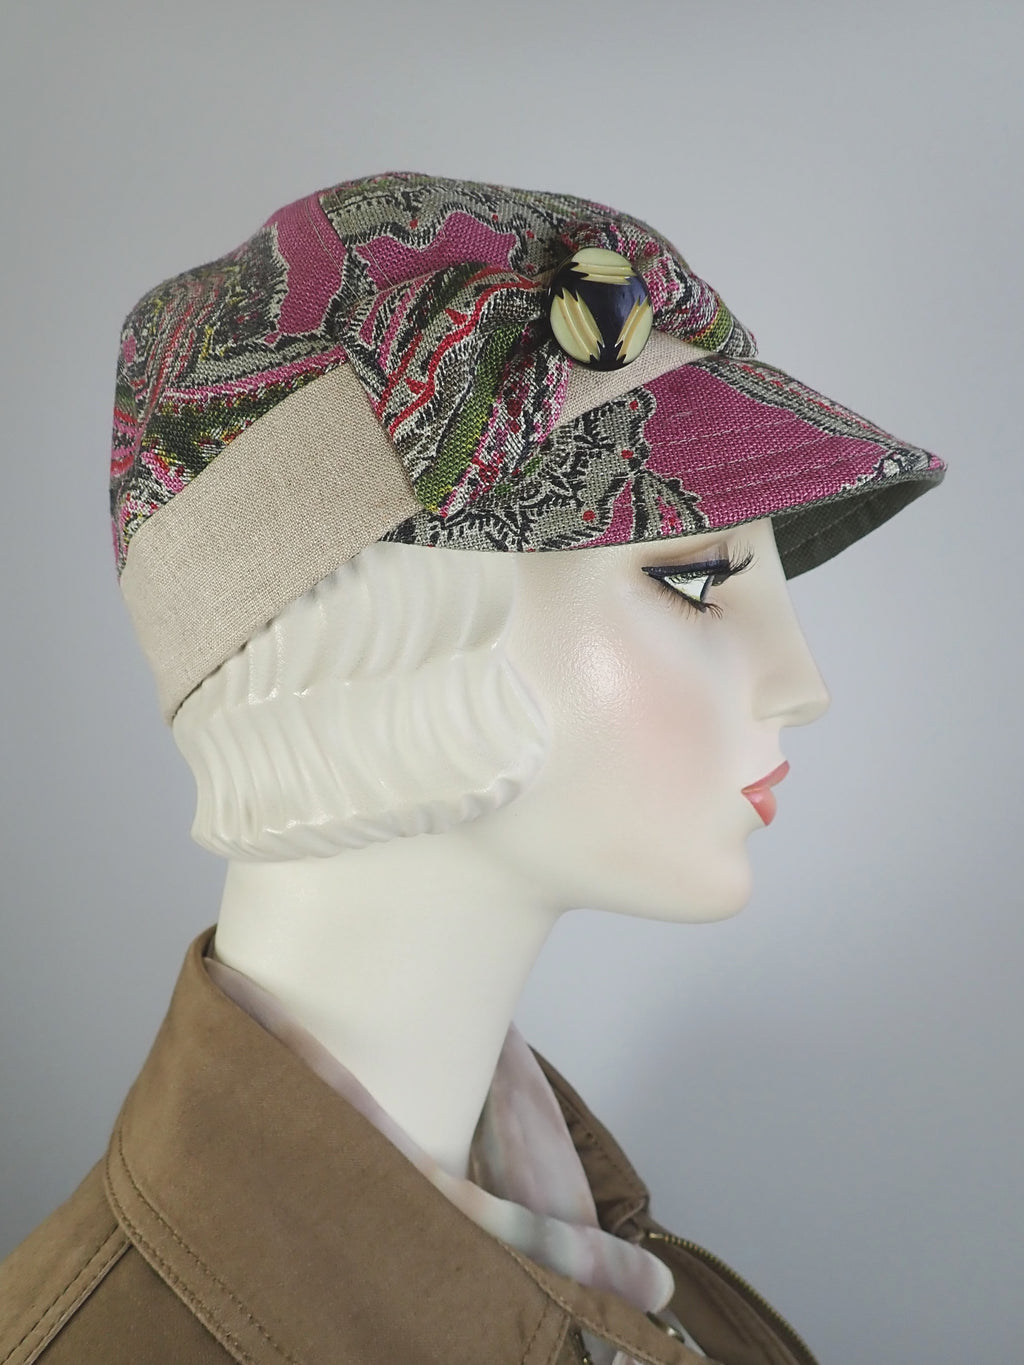 Womens Summer Hat paisley pink Linen. Baseball Newsboy Cap. Womens Visor travel Hat. Summer Cool Linen Hat. Casual eco friendly hat.